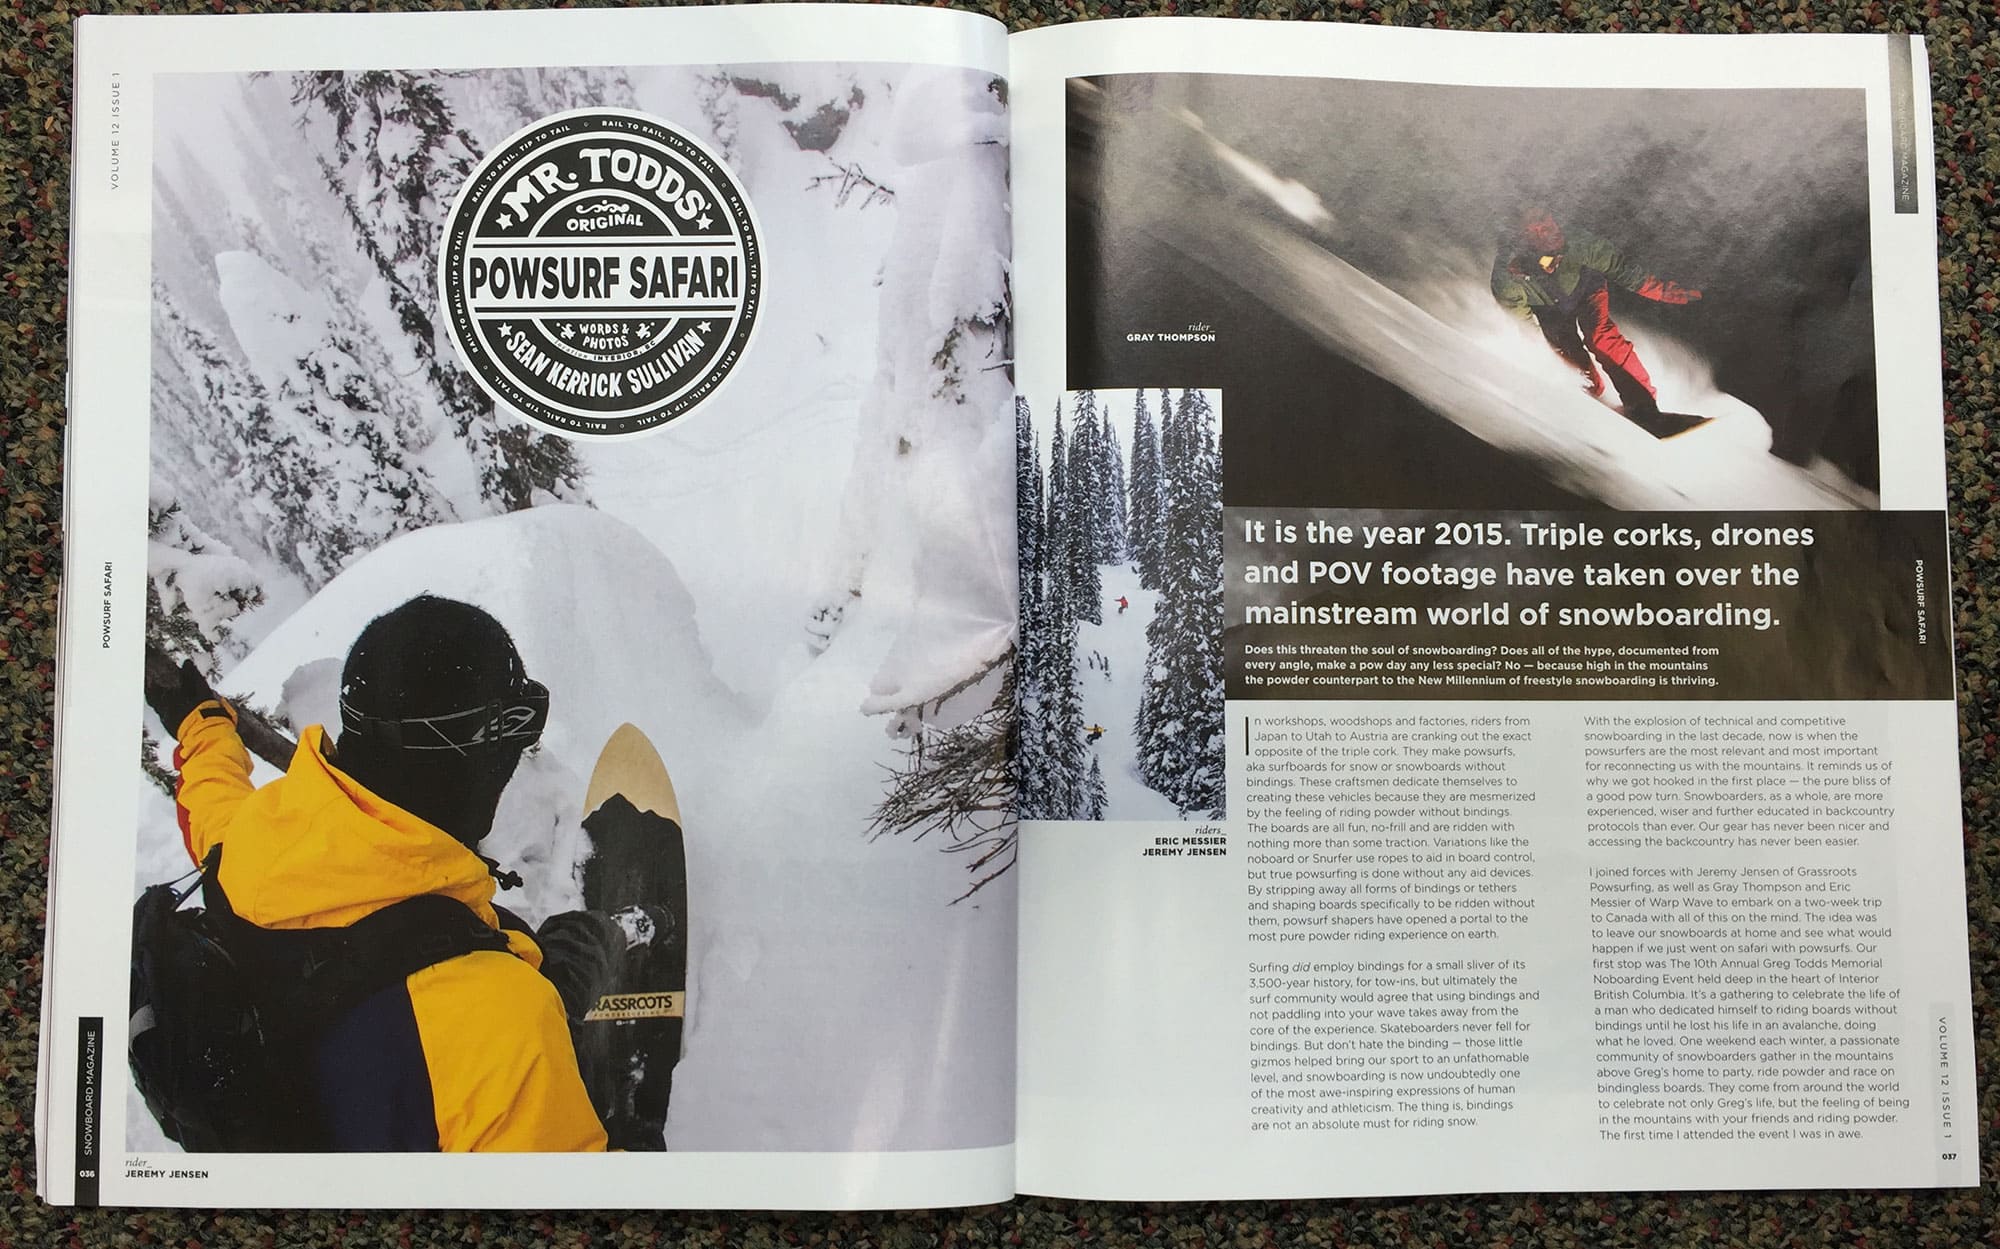 Powsurf Safari - Snowboard Magazine Article - Grassroots Powdersurfing